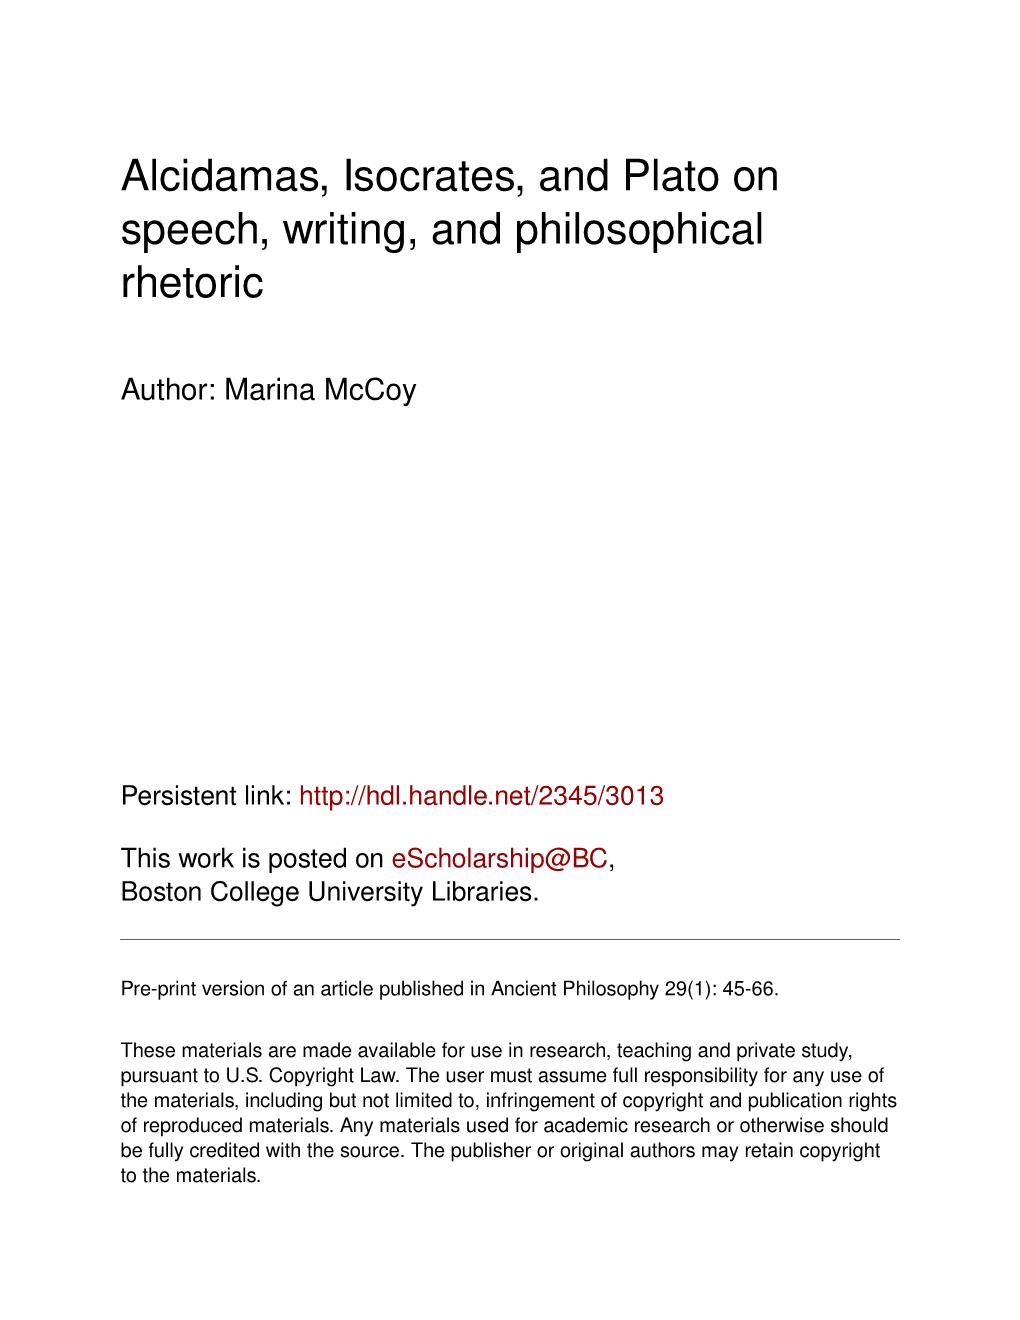 Alcidamas, Isocrates, and Plato on Speech, Writing, and Philosophical Rhetoric